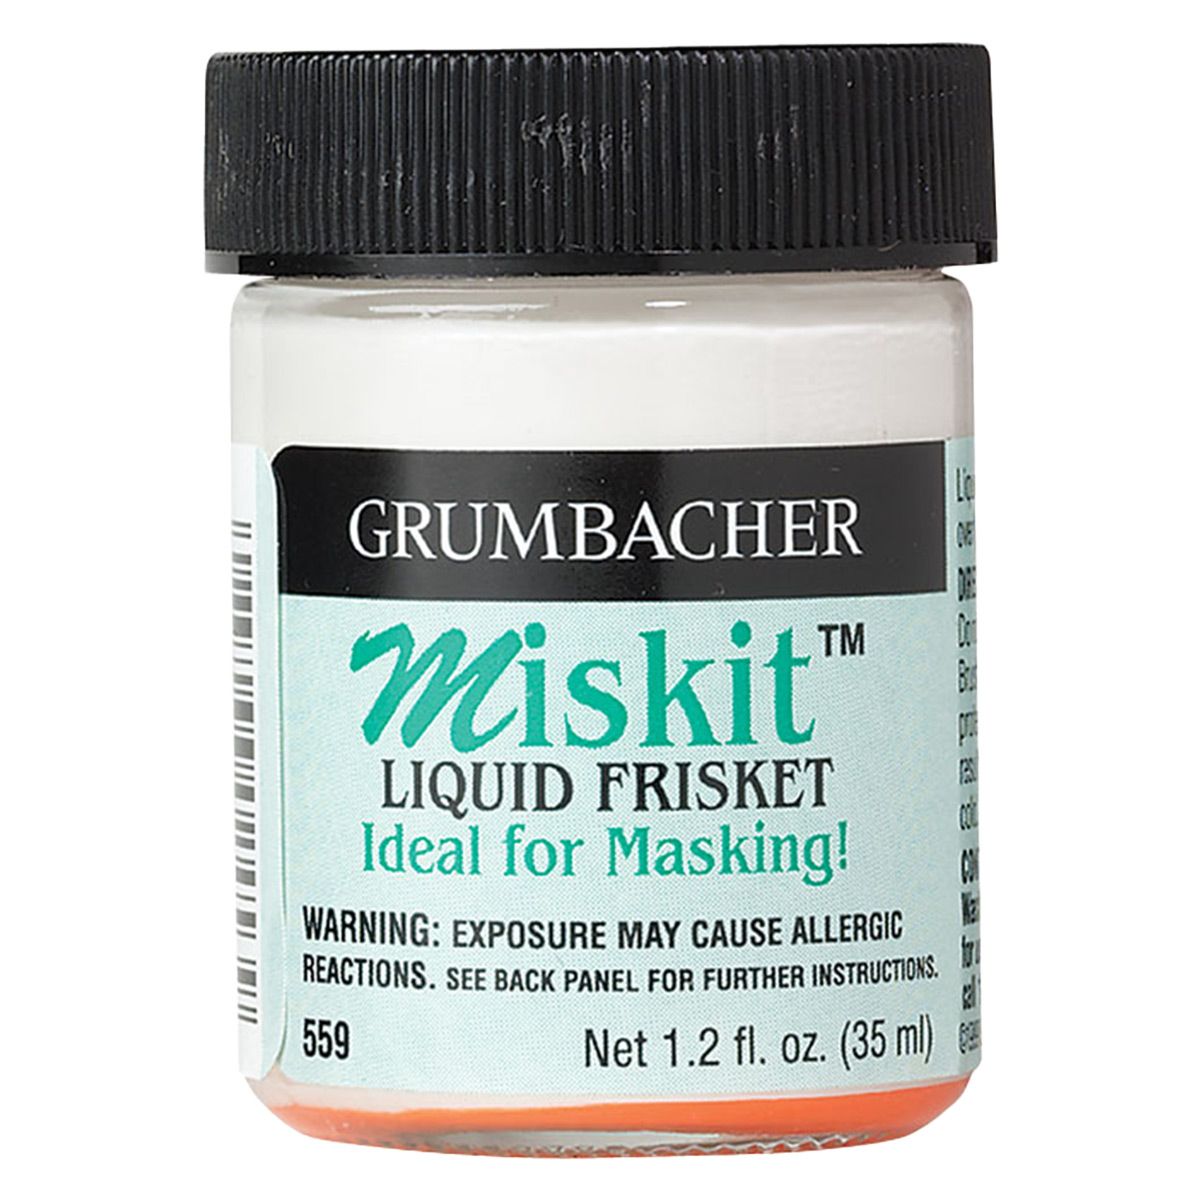 Grumbacher Miskit Liquid Frisket - 1.2 oz Jar